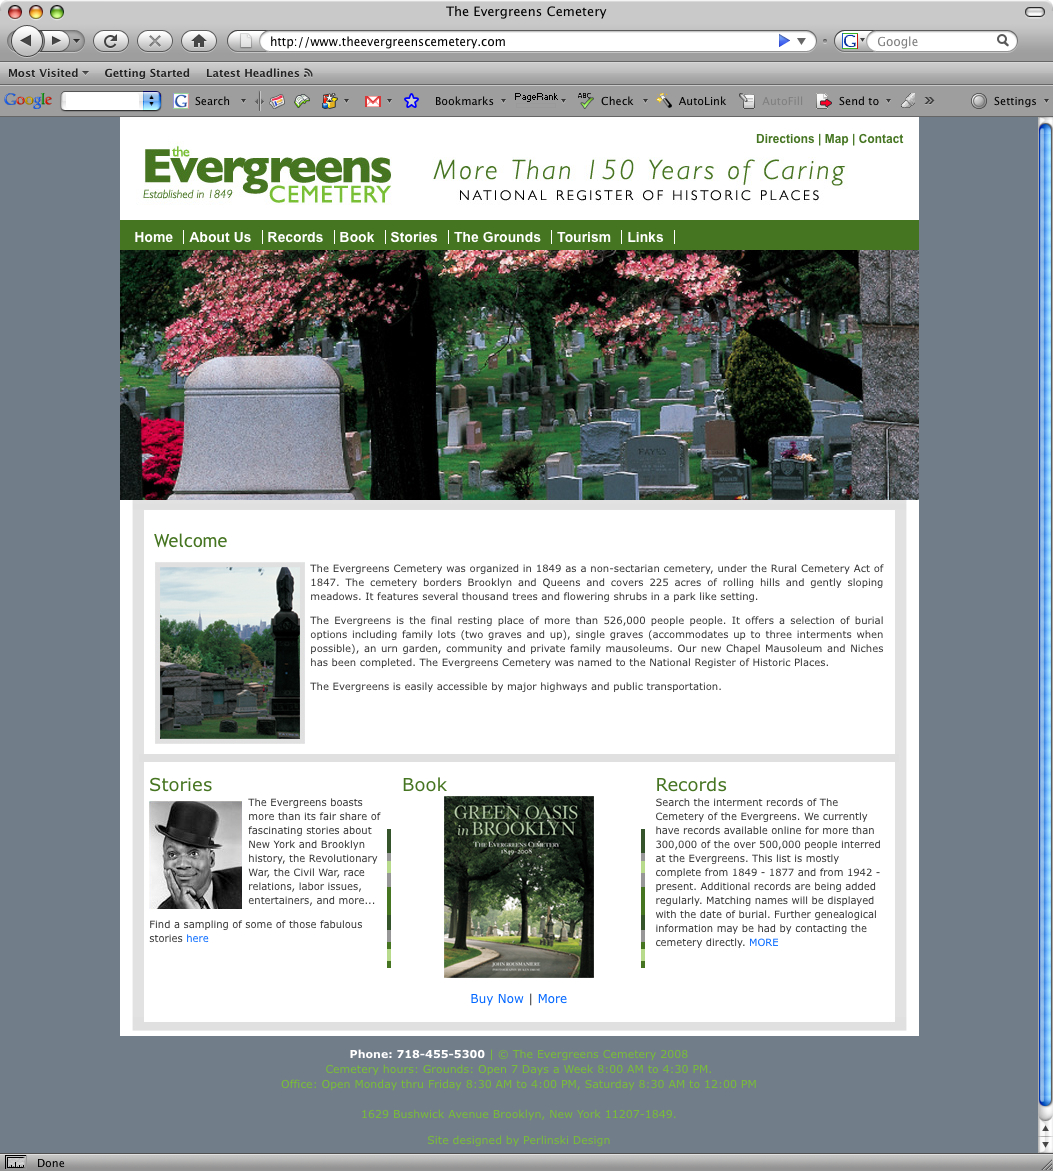 New Jersey Website Design - The Evergreens Cemetery